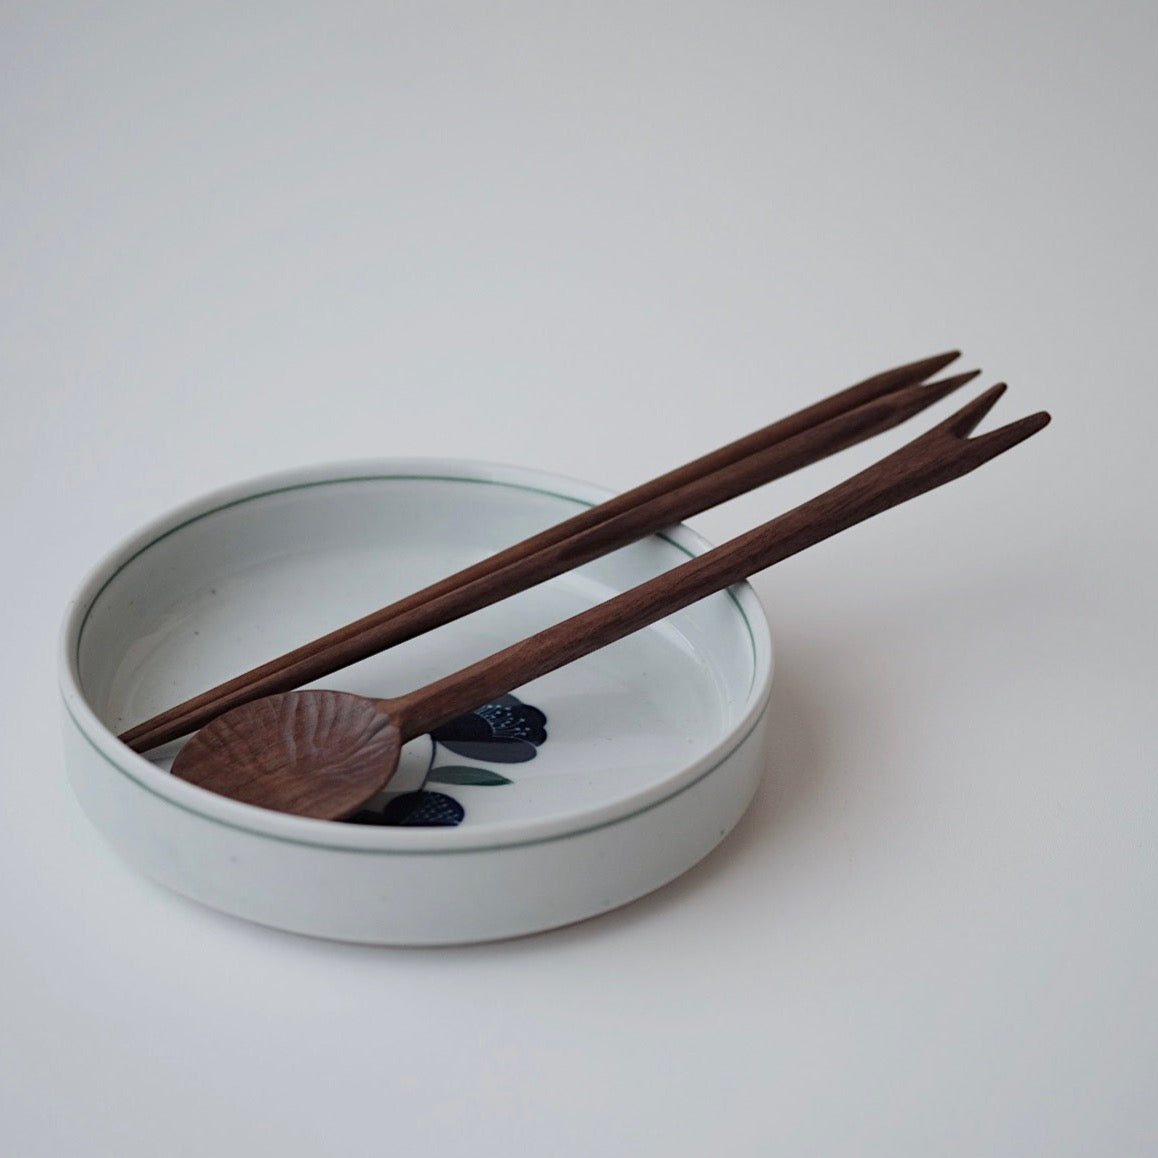 Jebi Tail Wooden Spoon and Chopstick Set